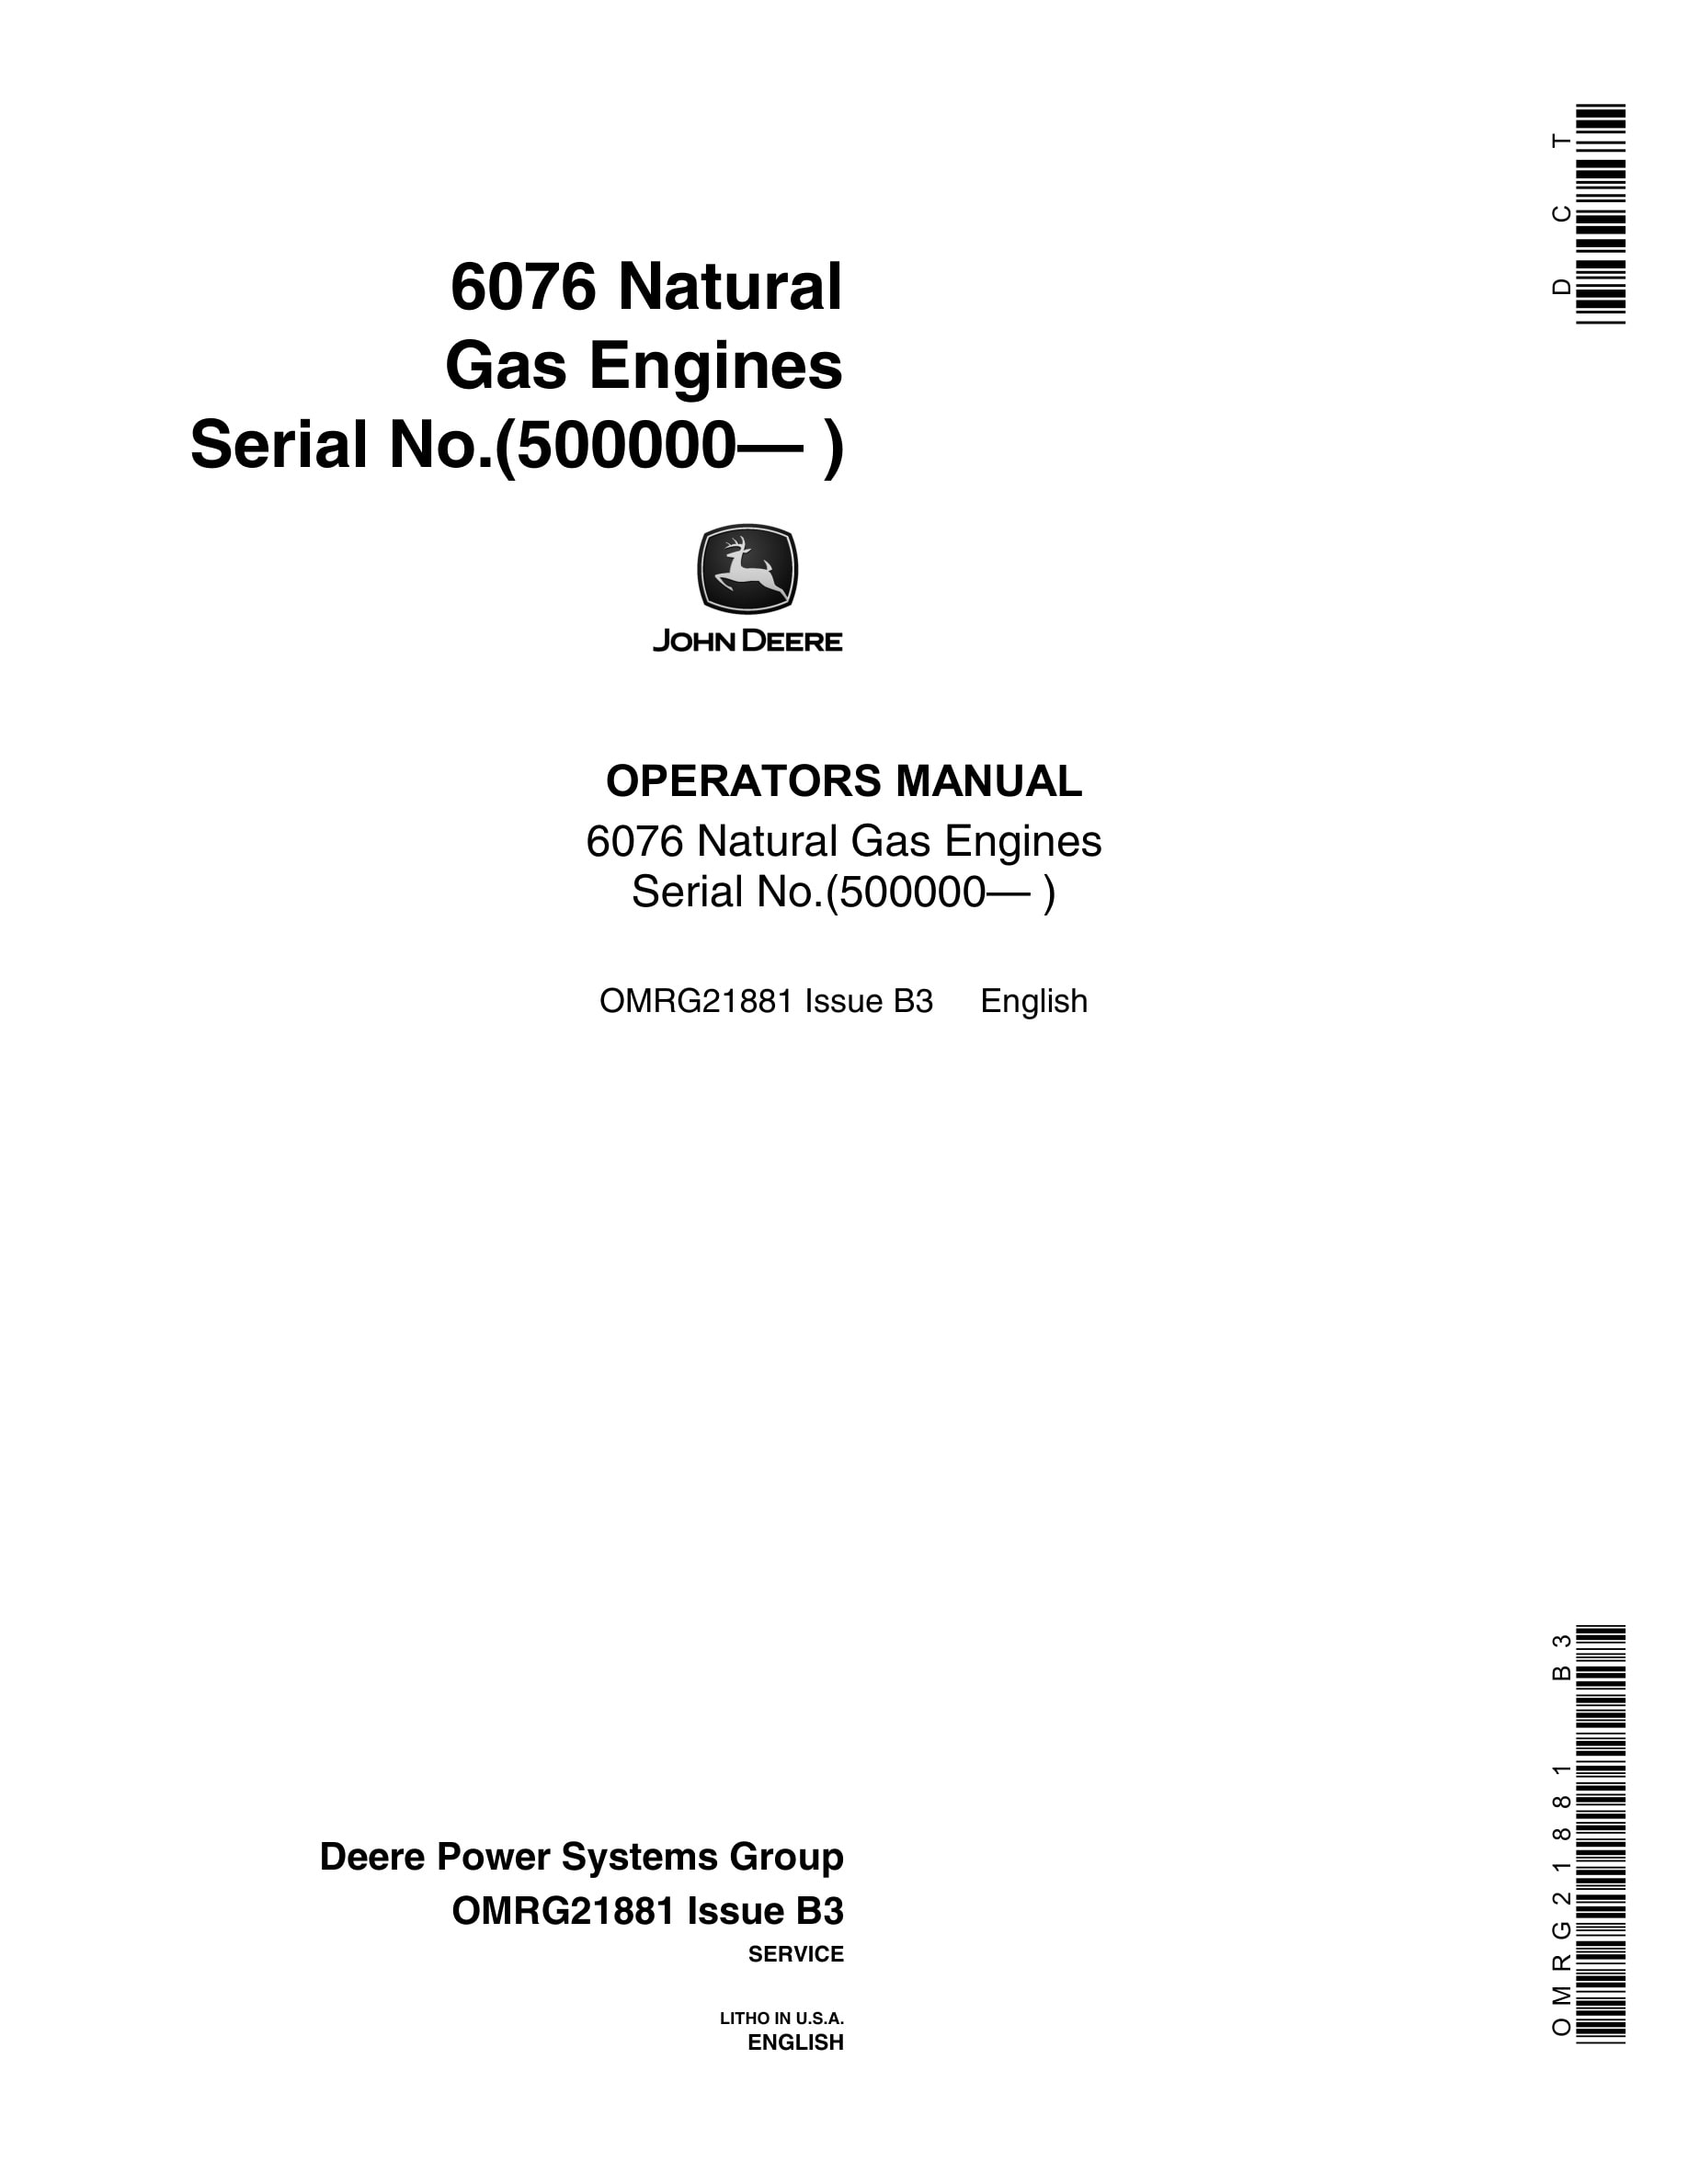 John Deere PowerTech 6076 Natural Gas Engines Operator Manual OMRG21881-1